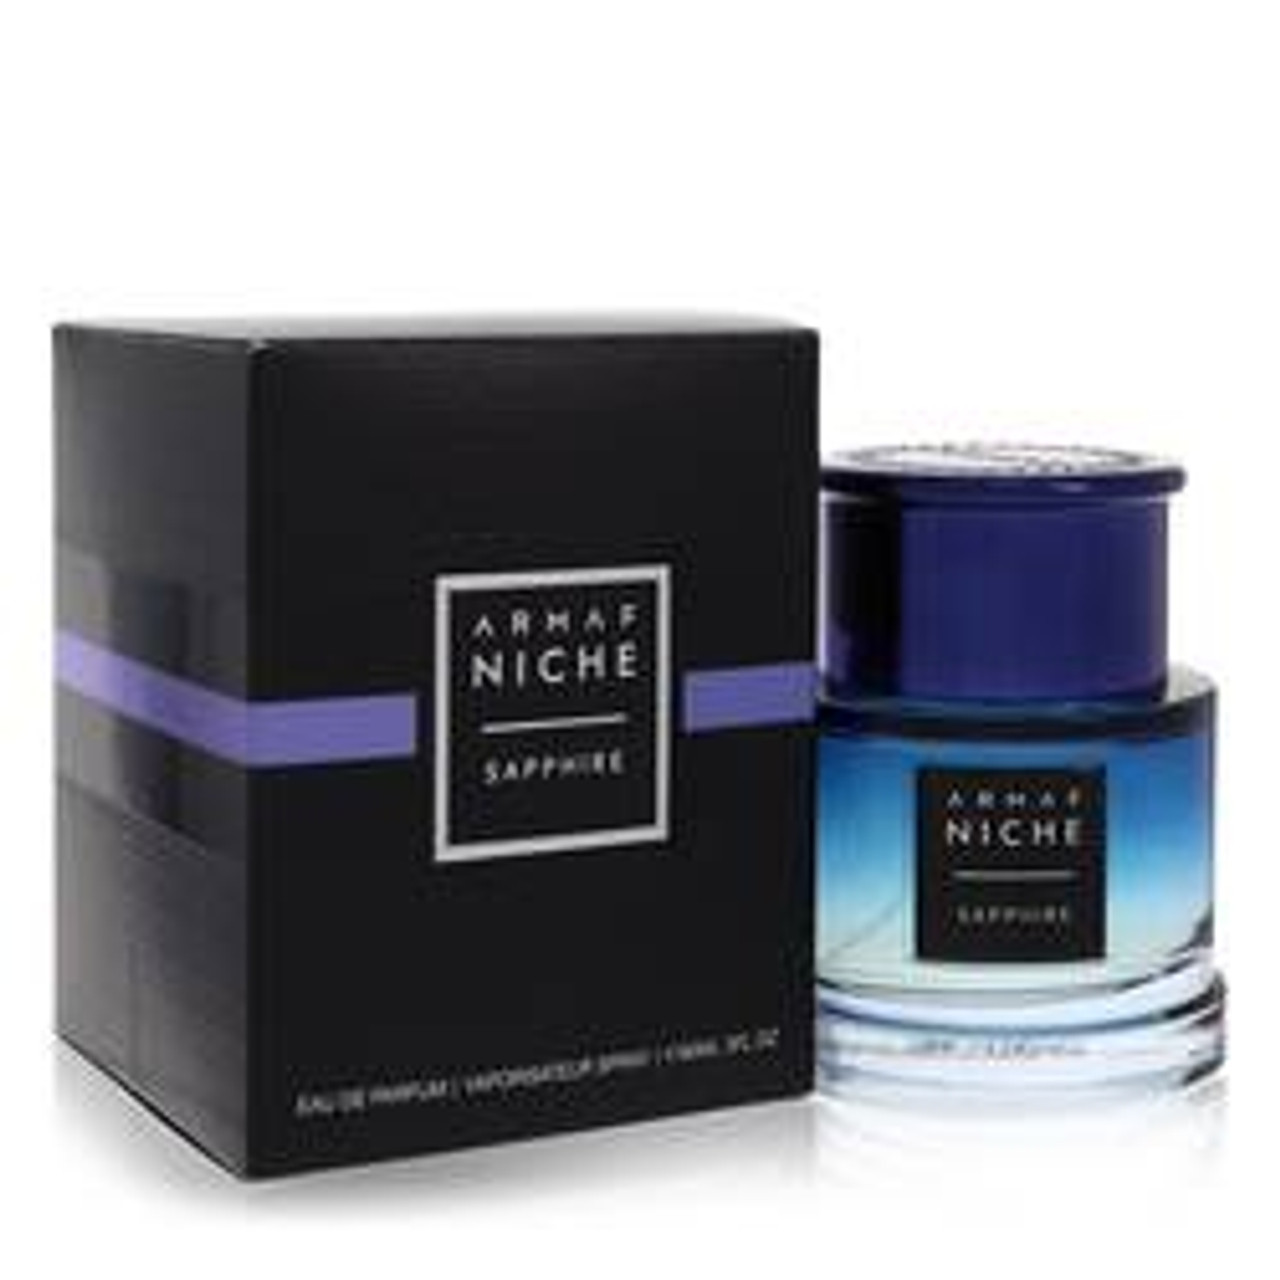 Armaf Niche Sapphire Perfume By Armaf Eau De Parfum Spray 3 oz for Women - [From 152.00 - Choose pk Qty ] - *Ships from Miami